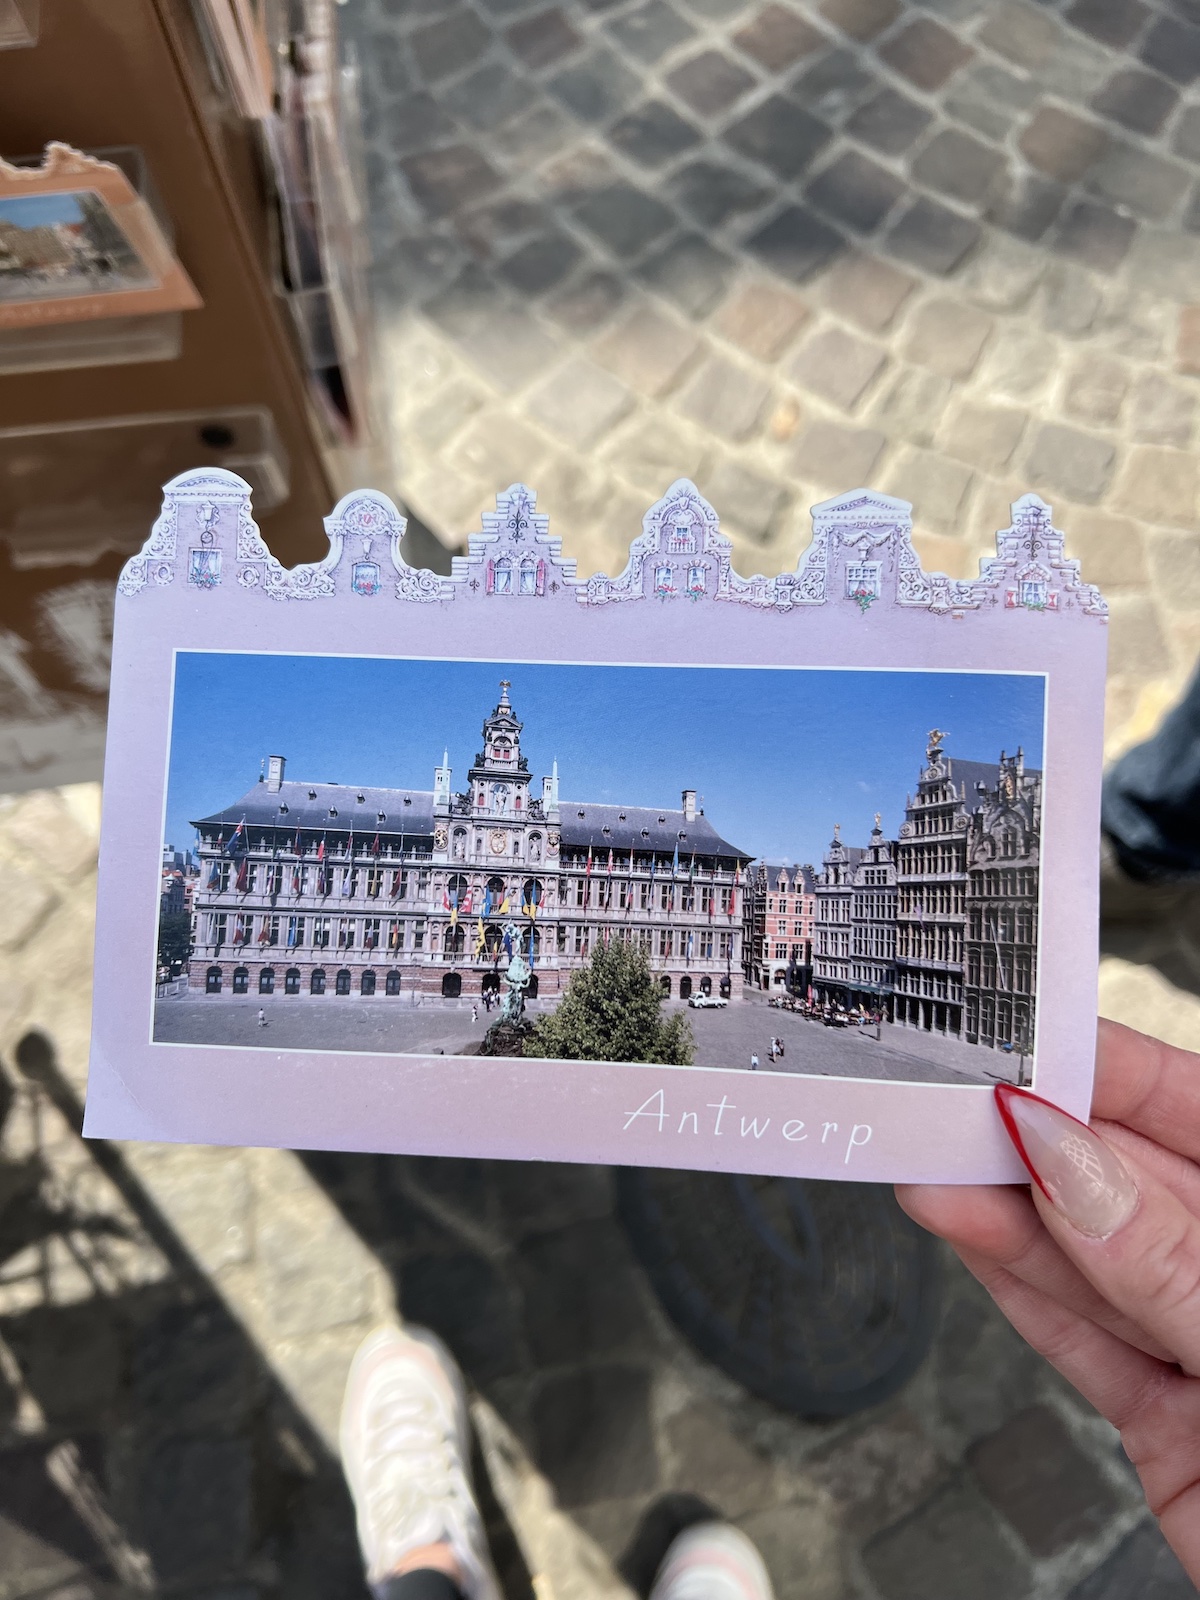 Antwerp post card